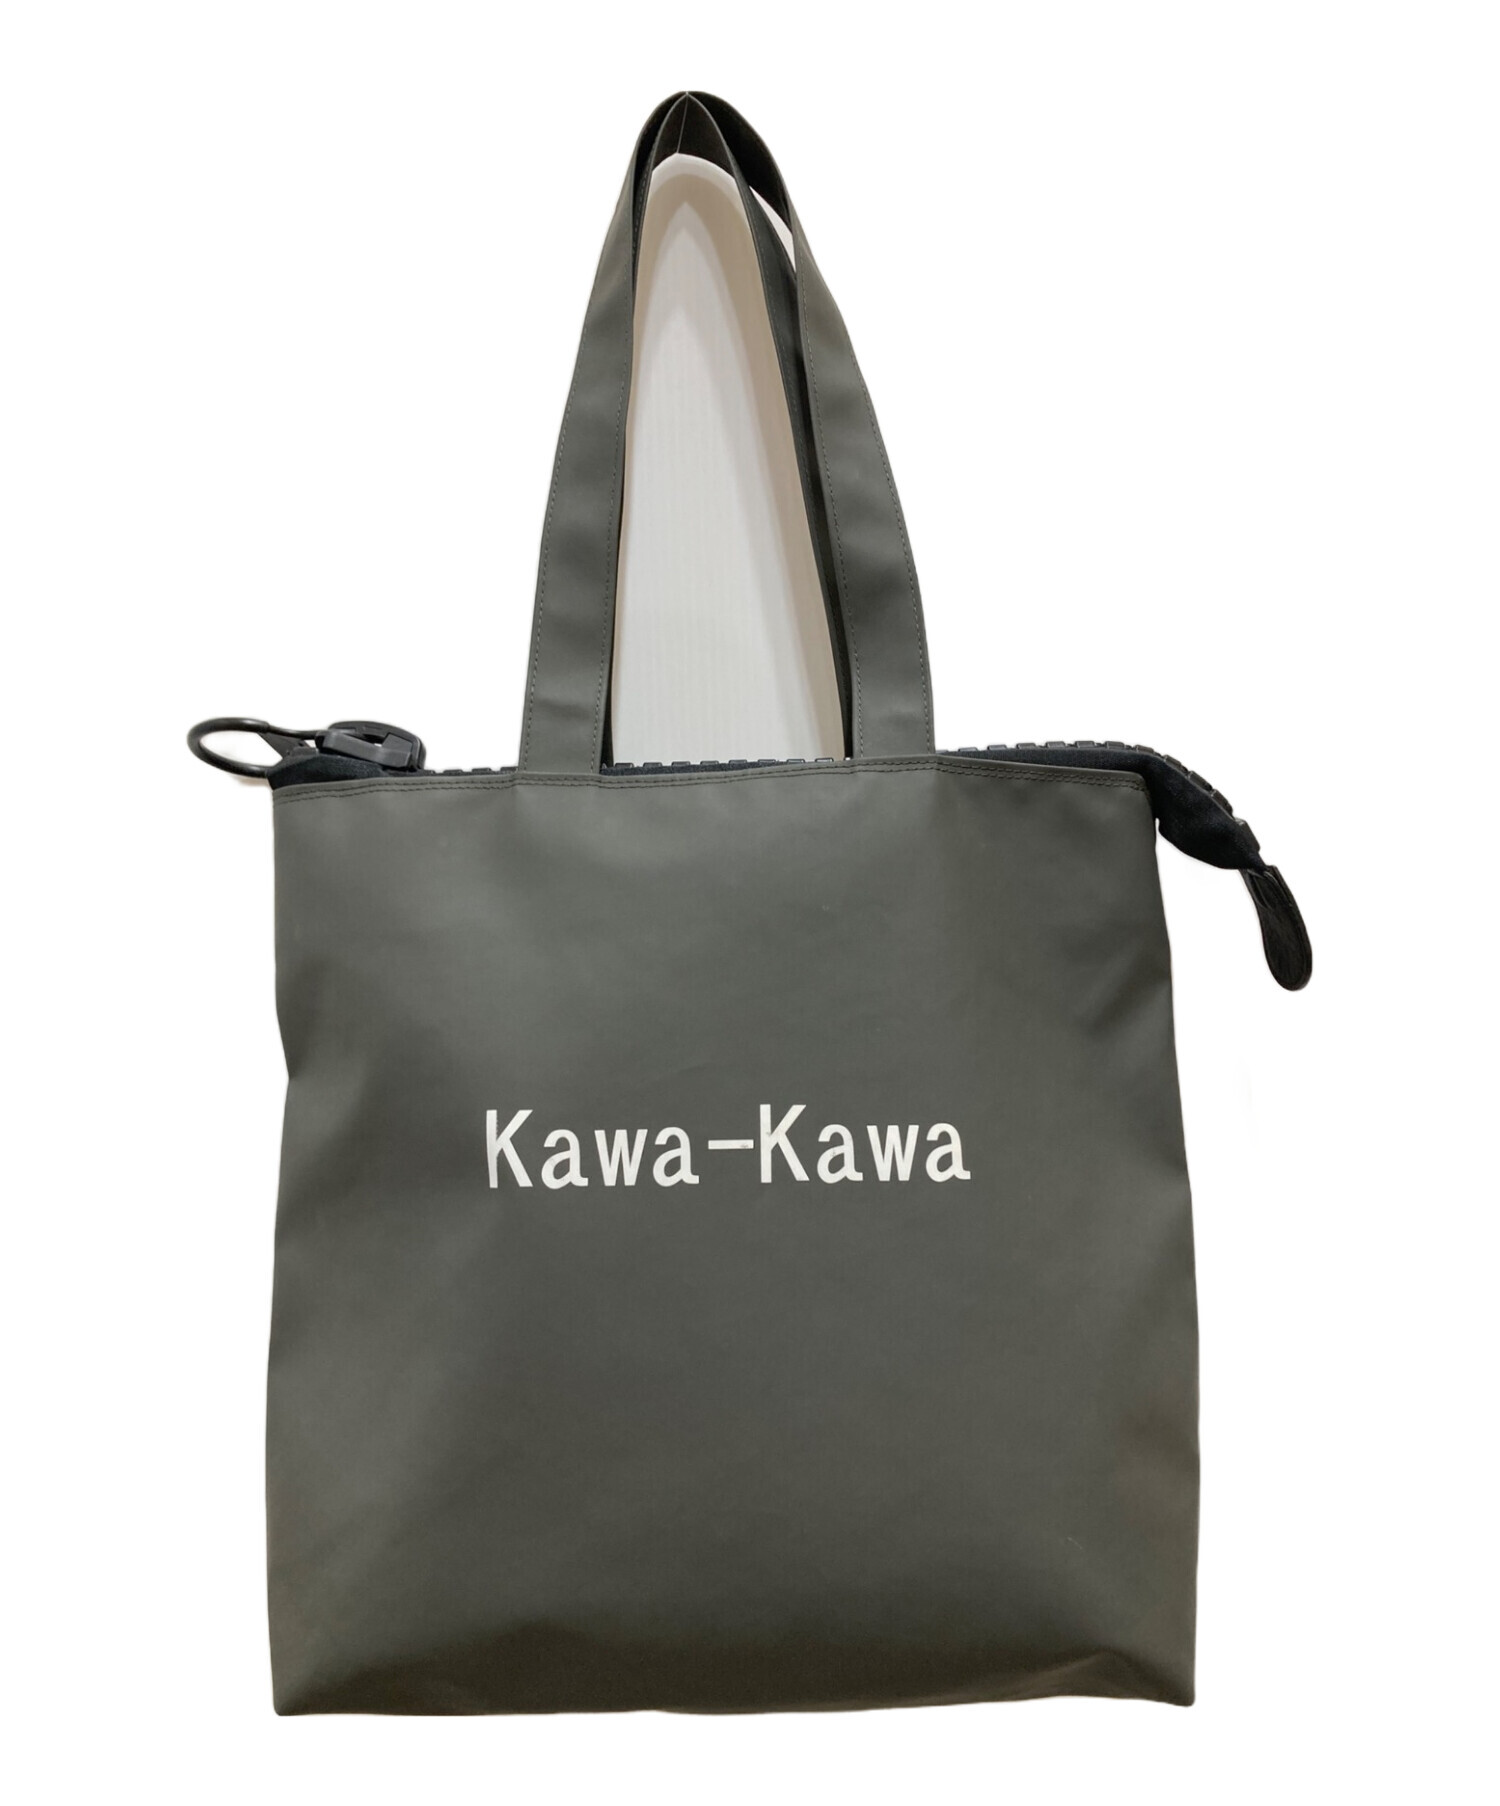 kawa-kawa (カワカワ) 25bisロゴ入りトート グレー